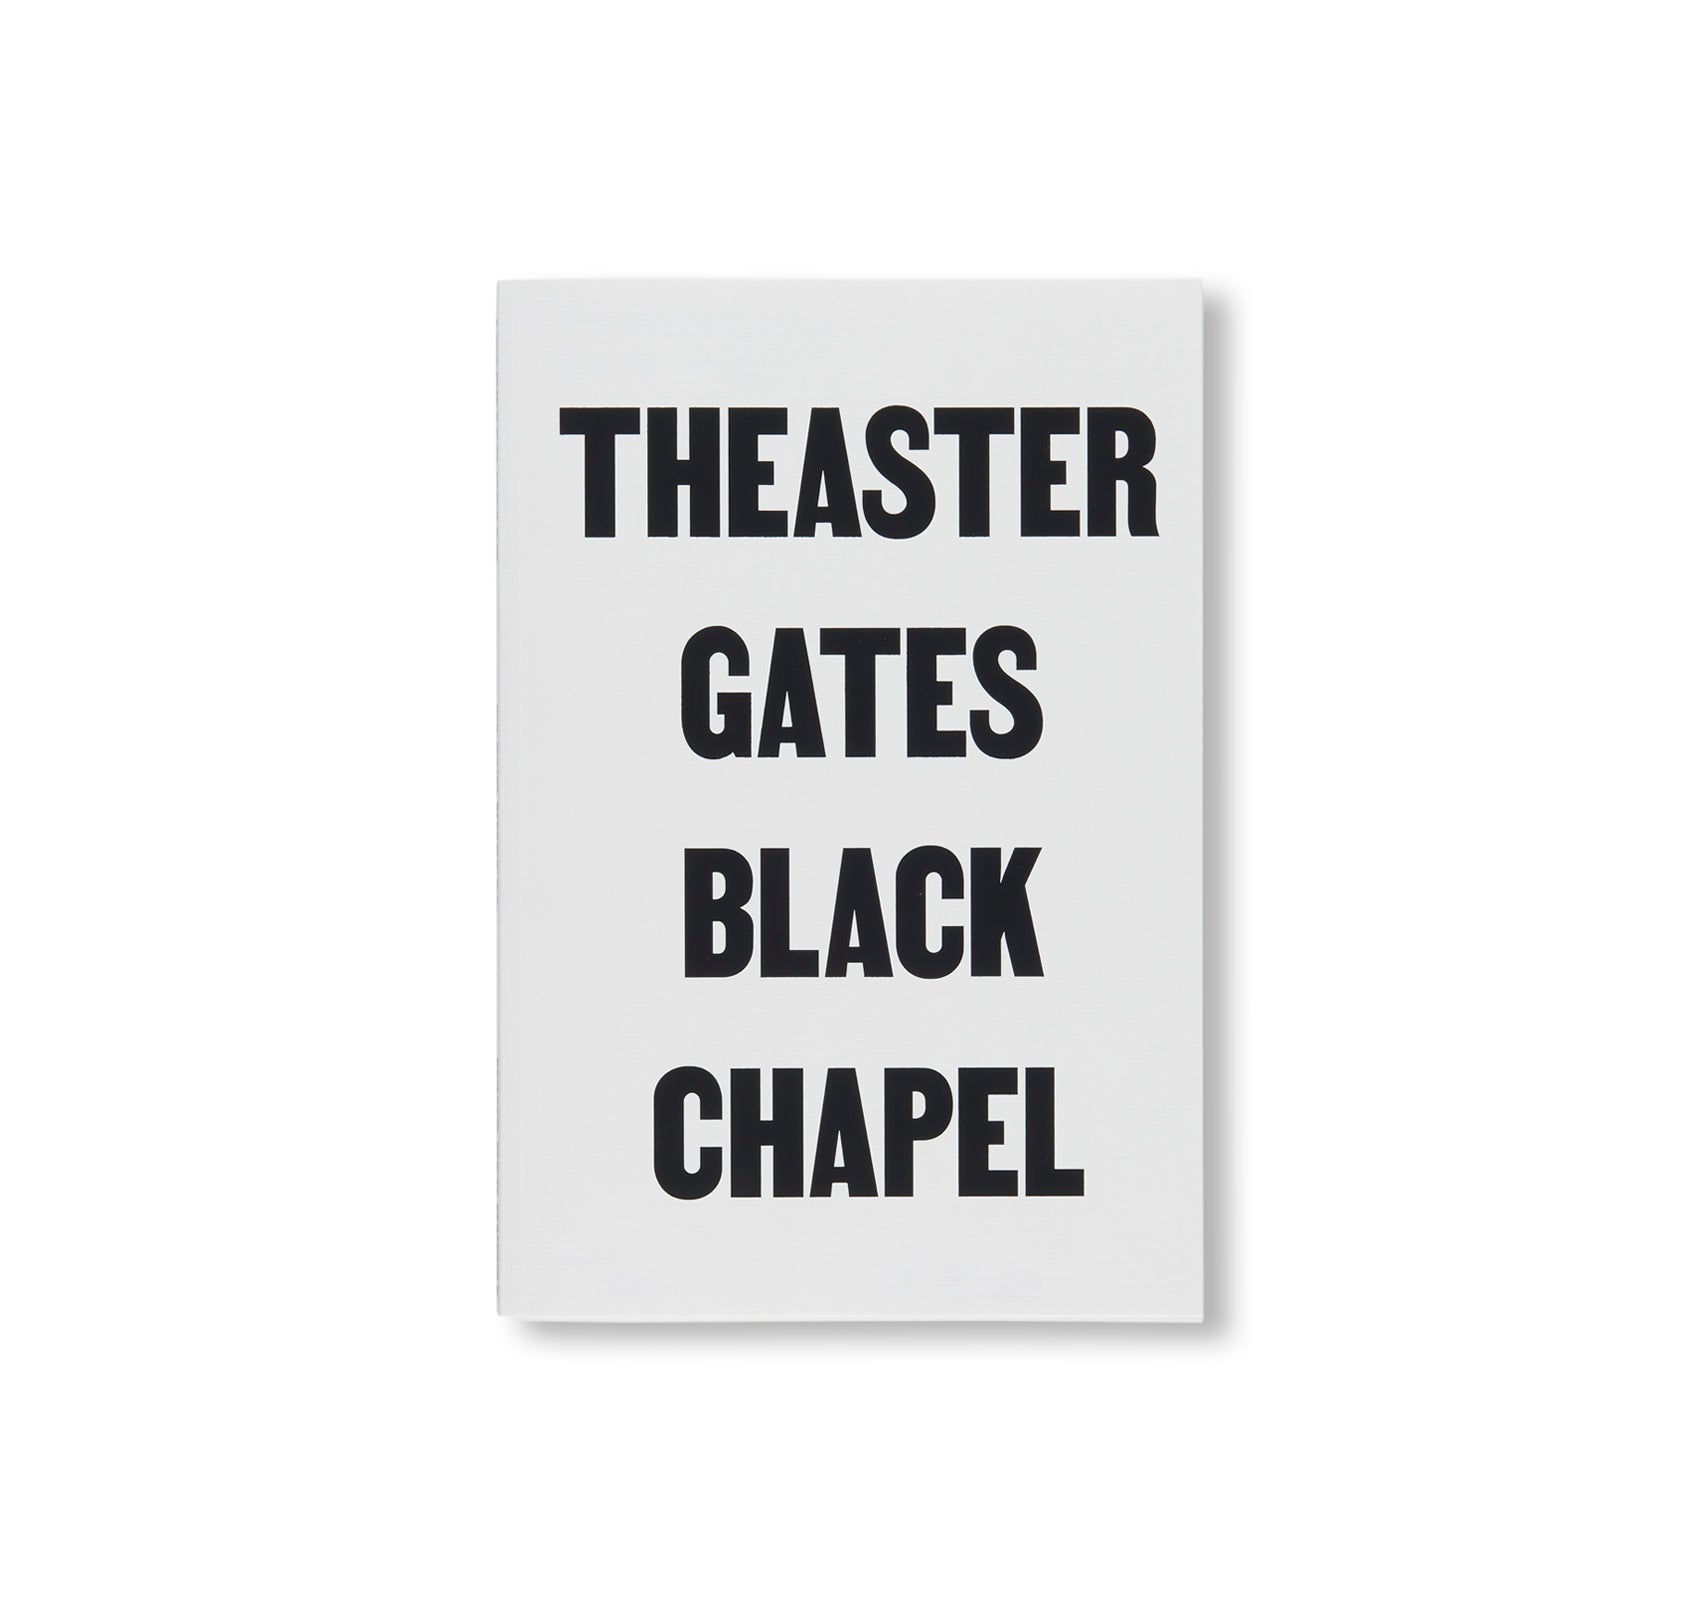 BLACK CHAPEL by Theaster Gates